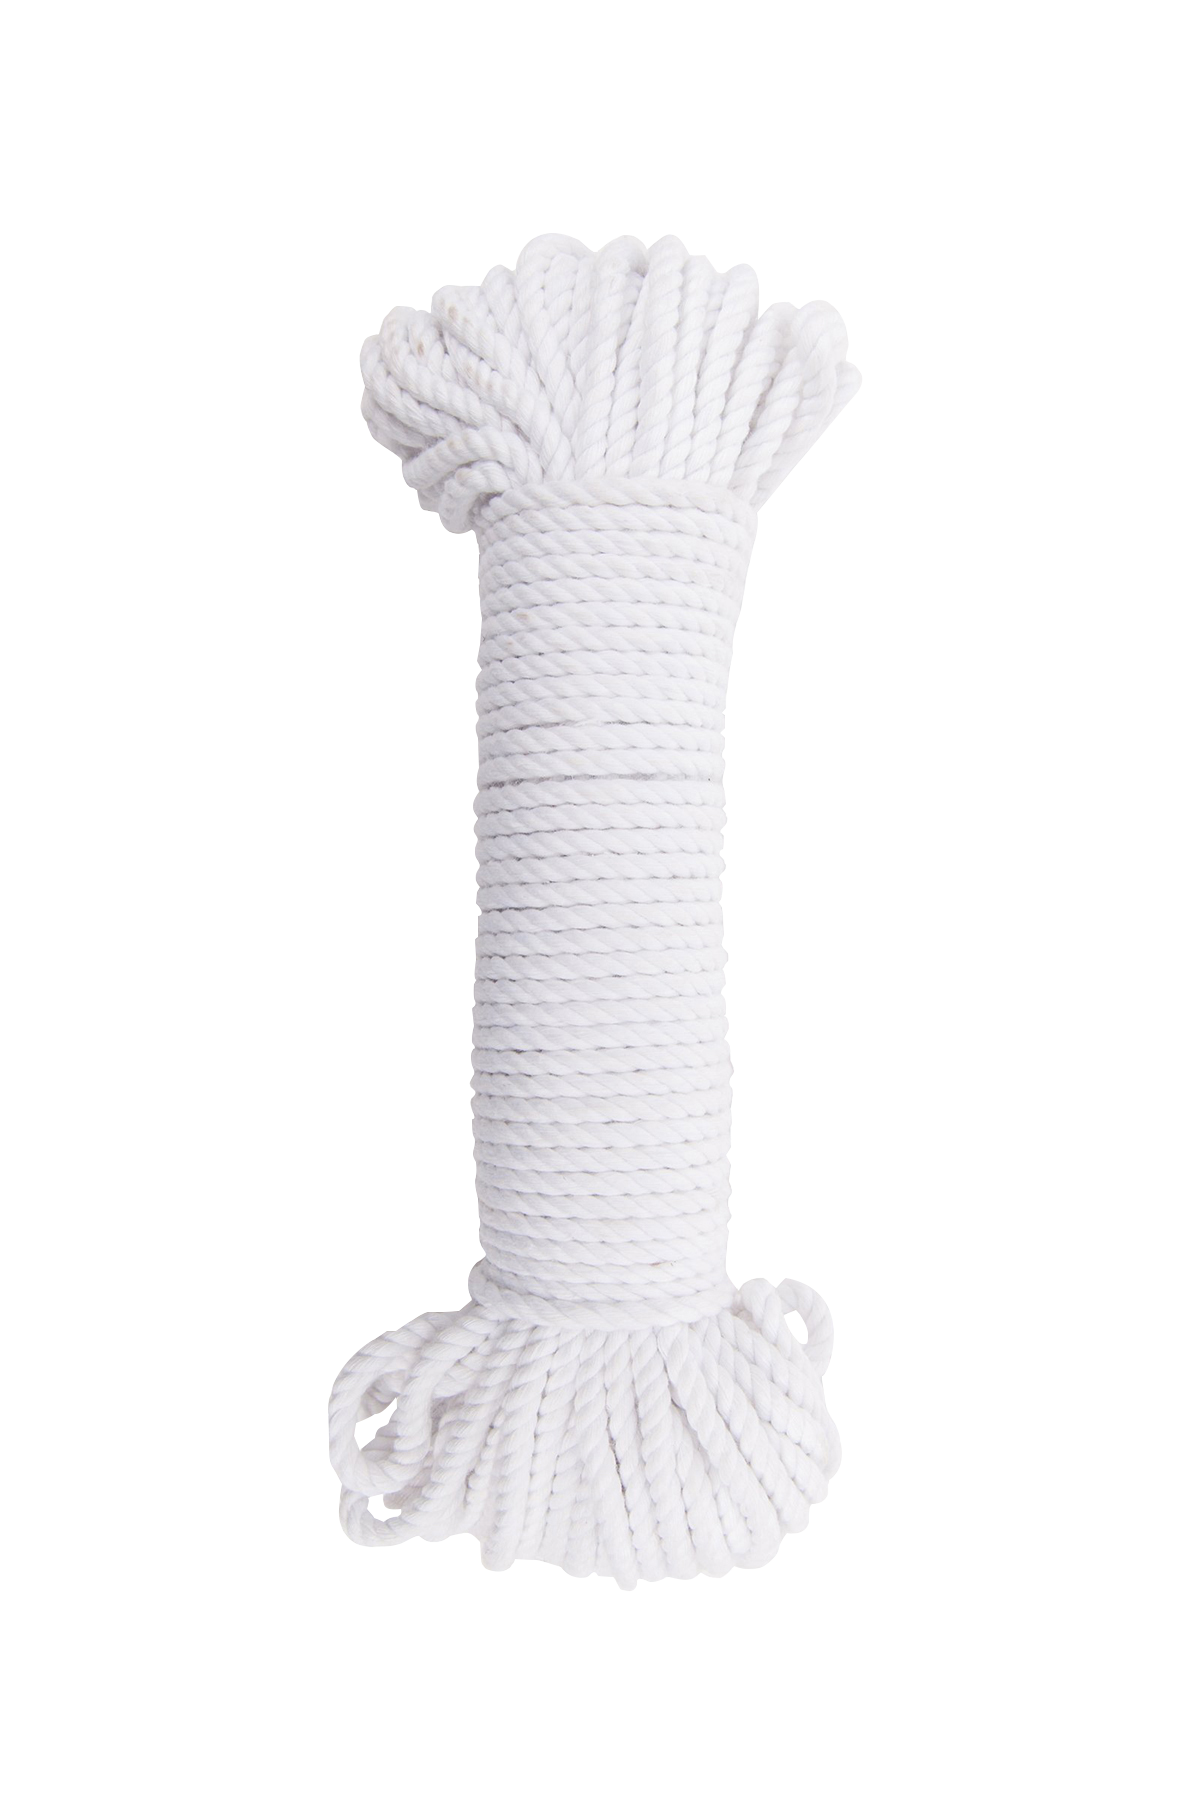 5mm cotton rope bundle bright white